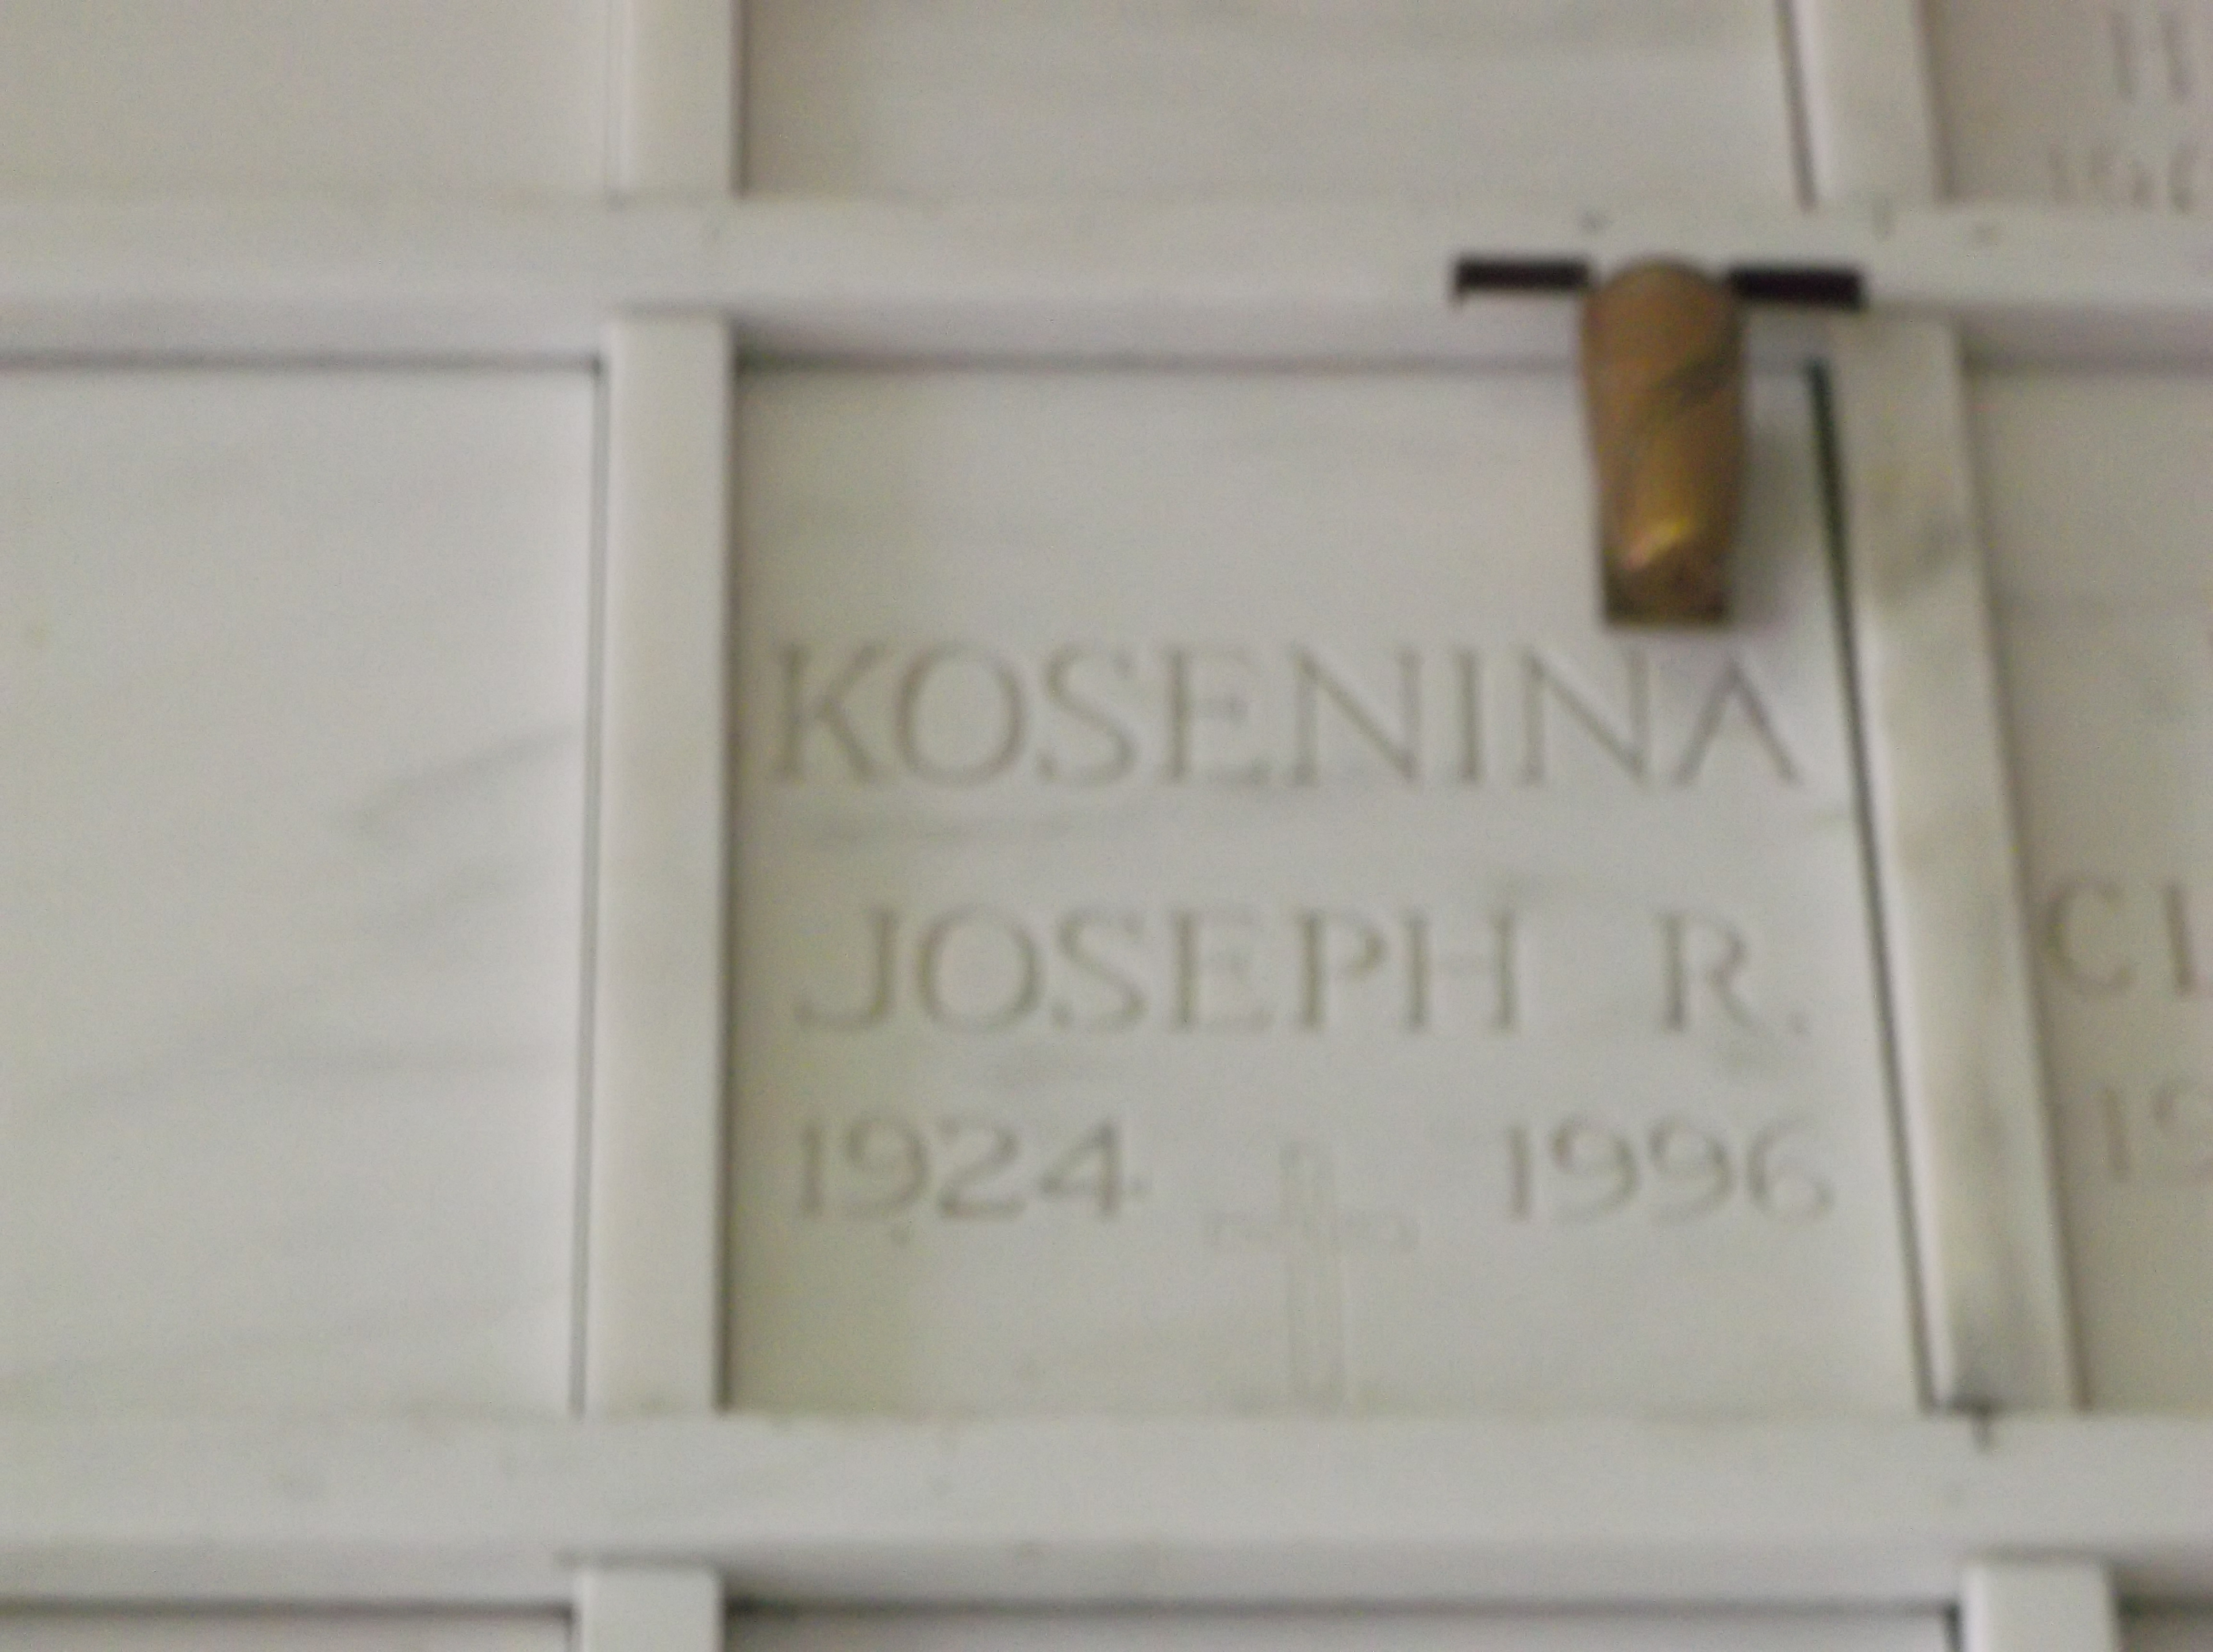 Joseph R Kosenina